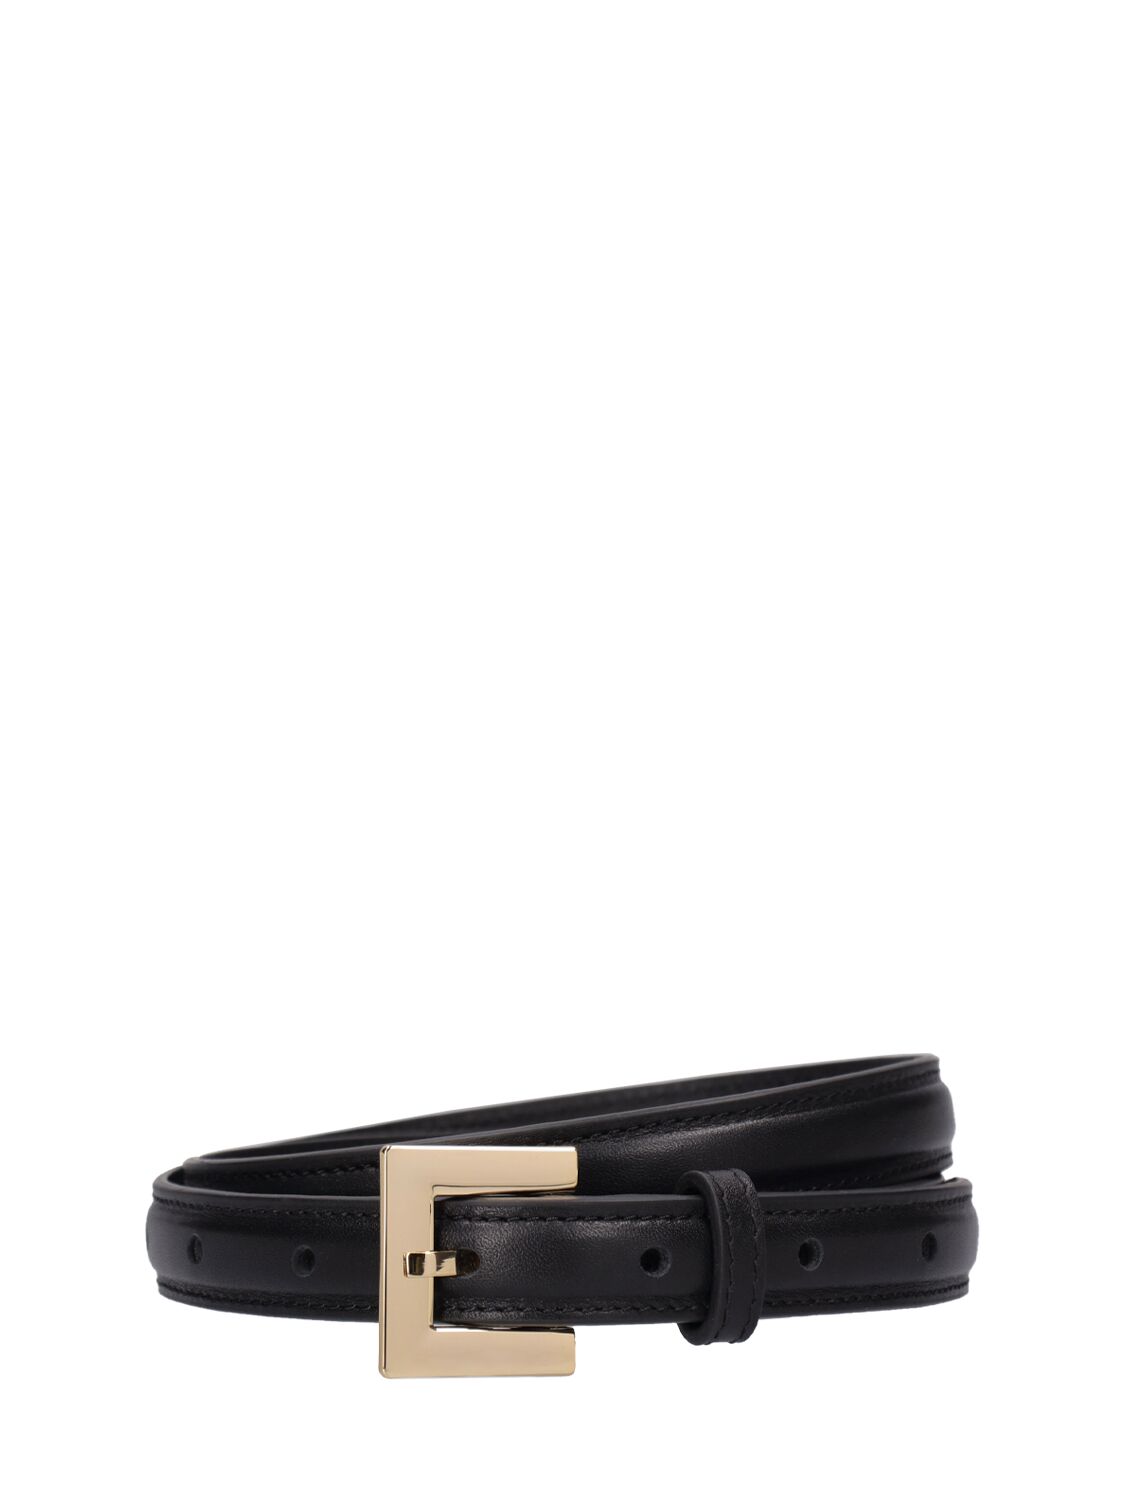 Image of Nicola Leather Belt